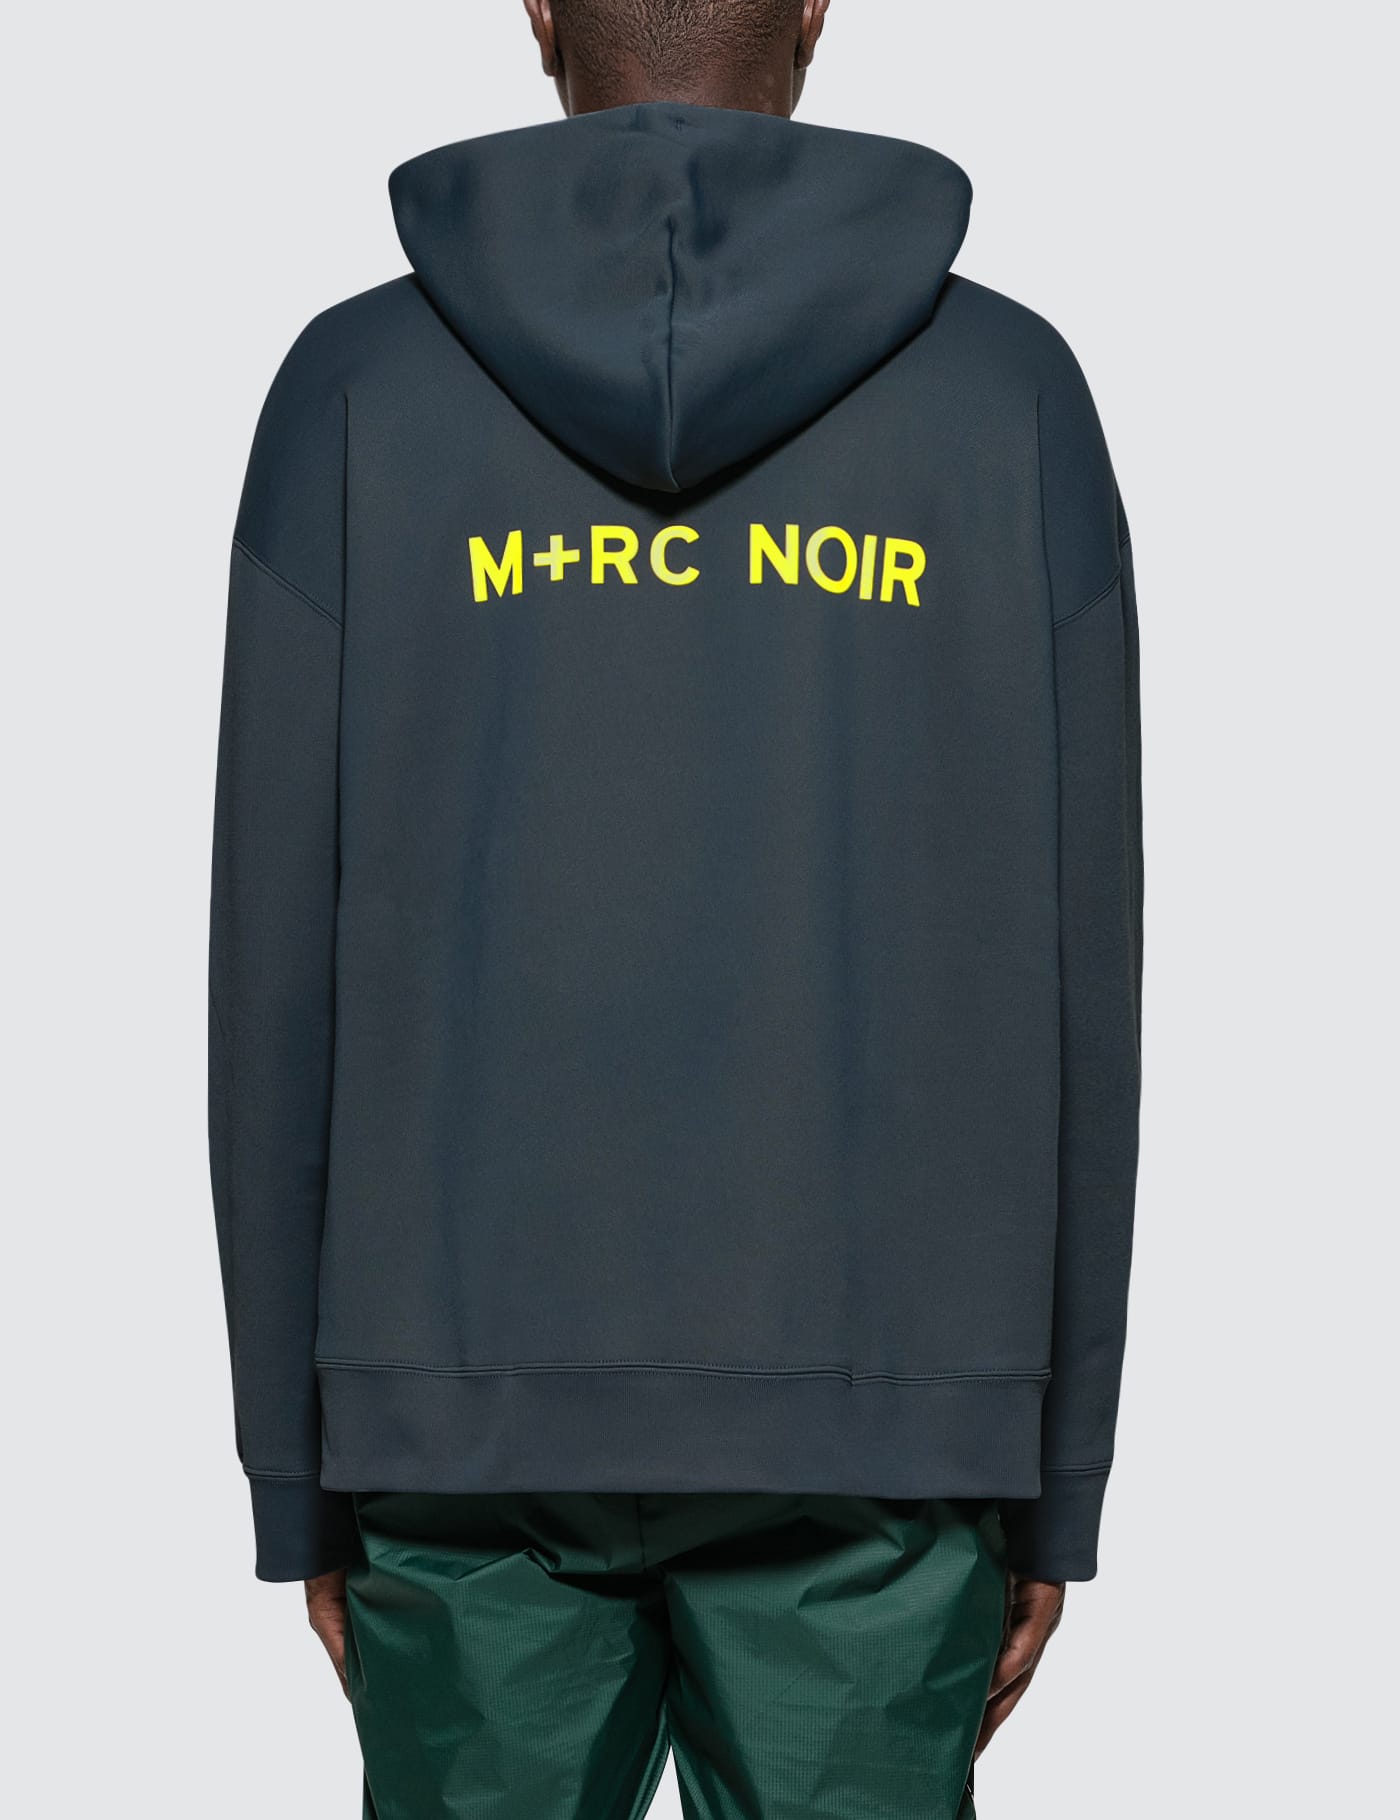 M+RC NOIR(マルシェノア) NO BASIC HOODIE Grey S